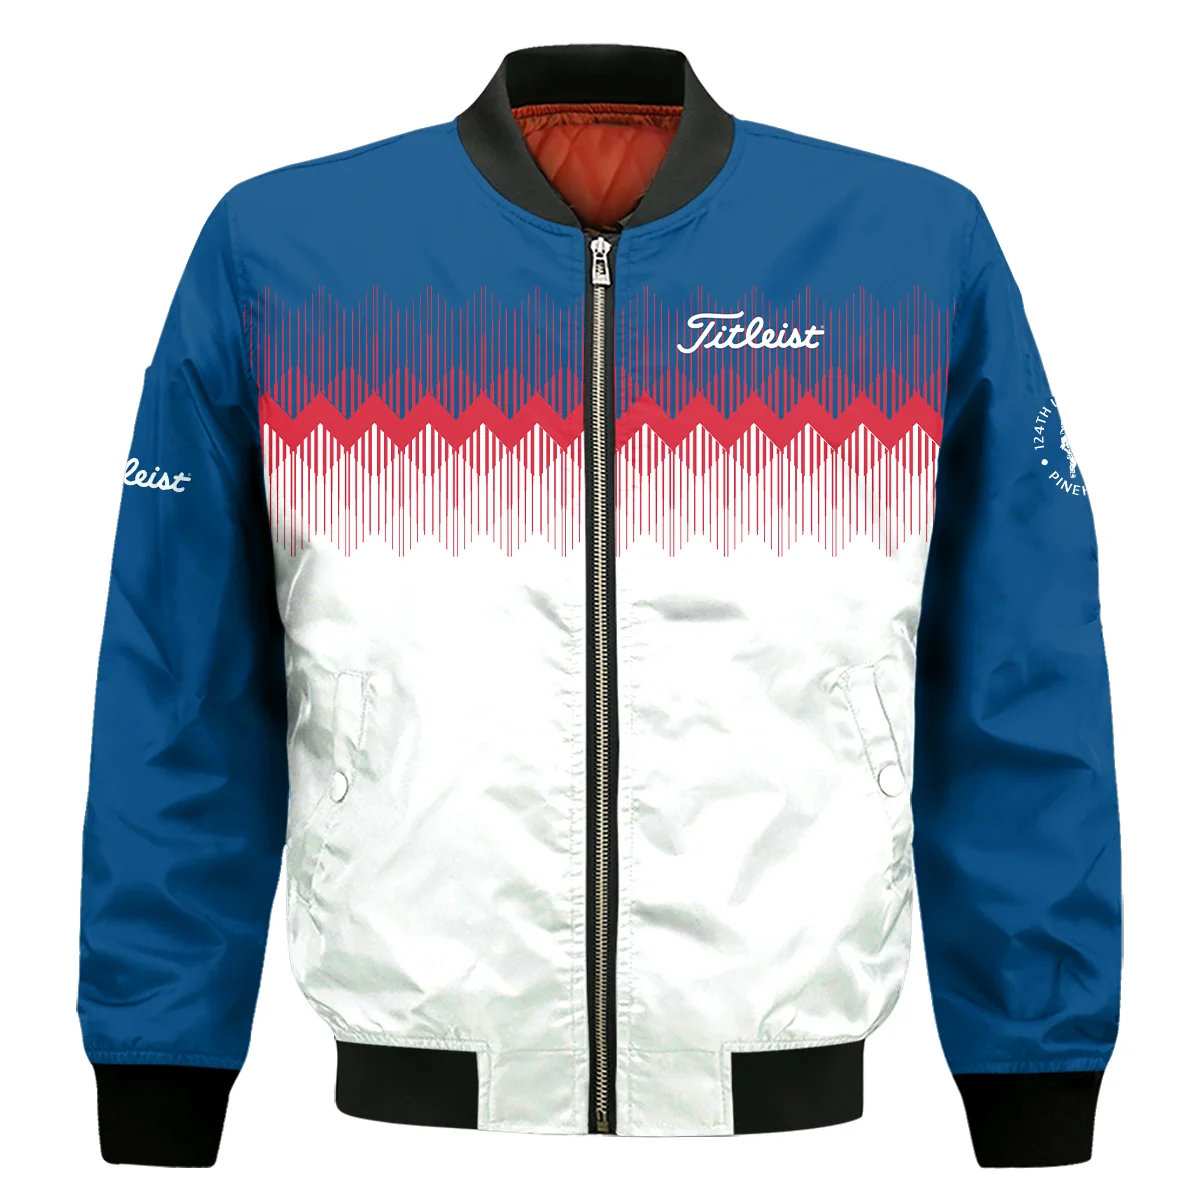 Titleist 124th U.S. Open Pinehurst Bomber Jacket Blue Red Fabric Pattern Golf Bomber Jacket